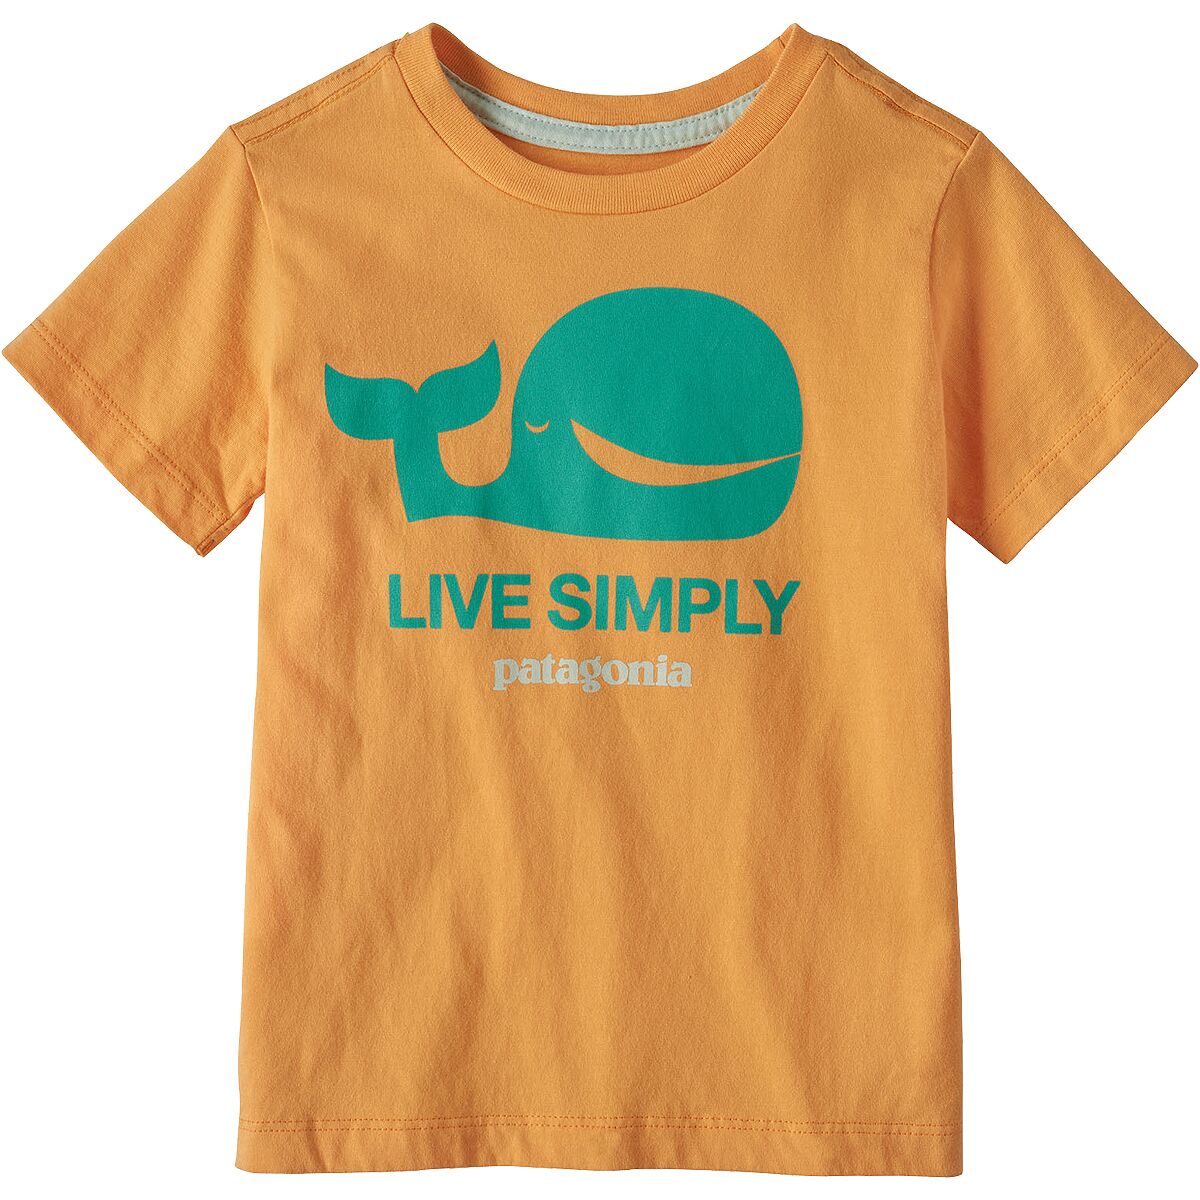 Patagonia Regenerative Organic Cotton Live Simply T-Shirt - Toddlers'